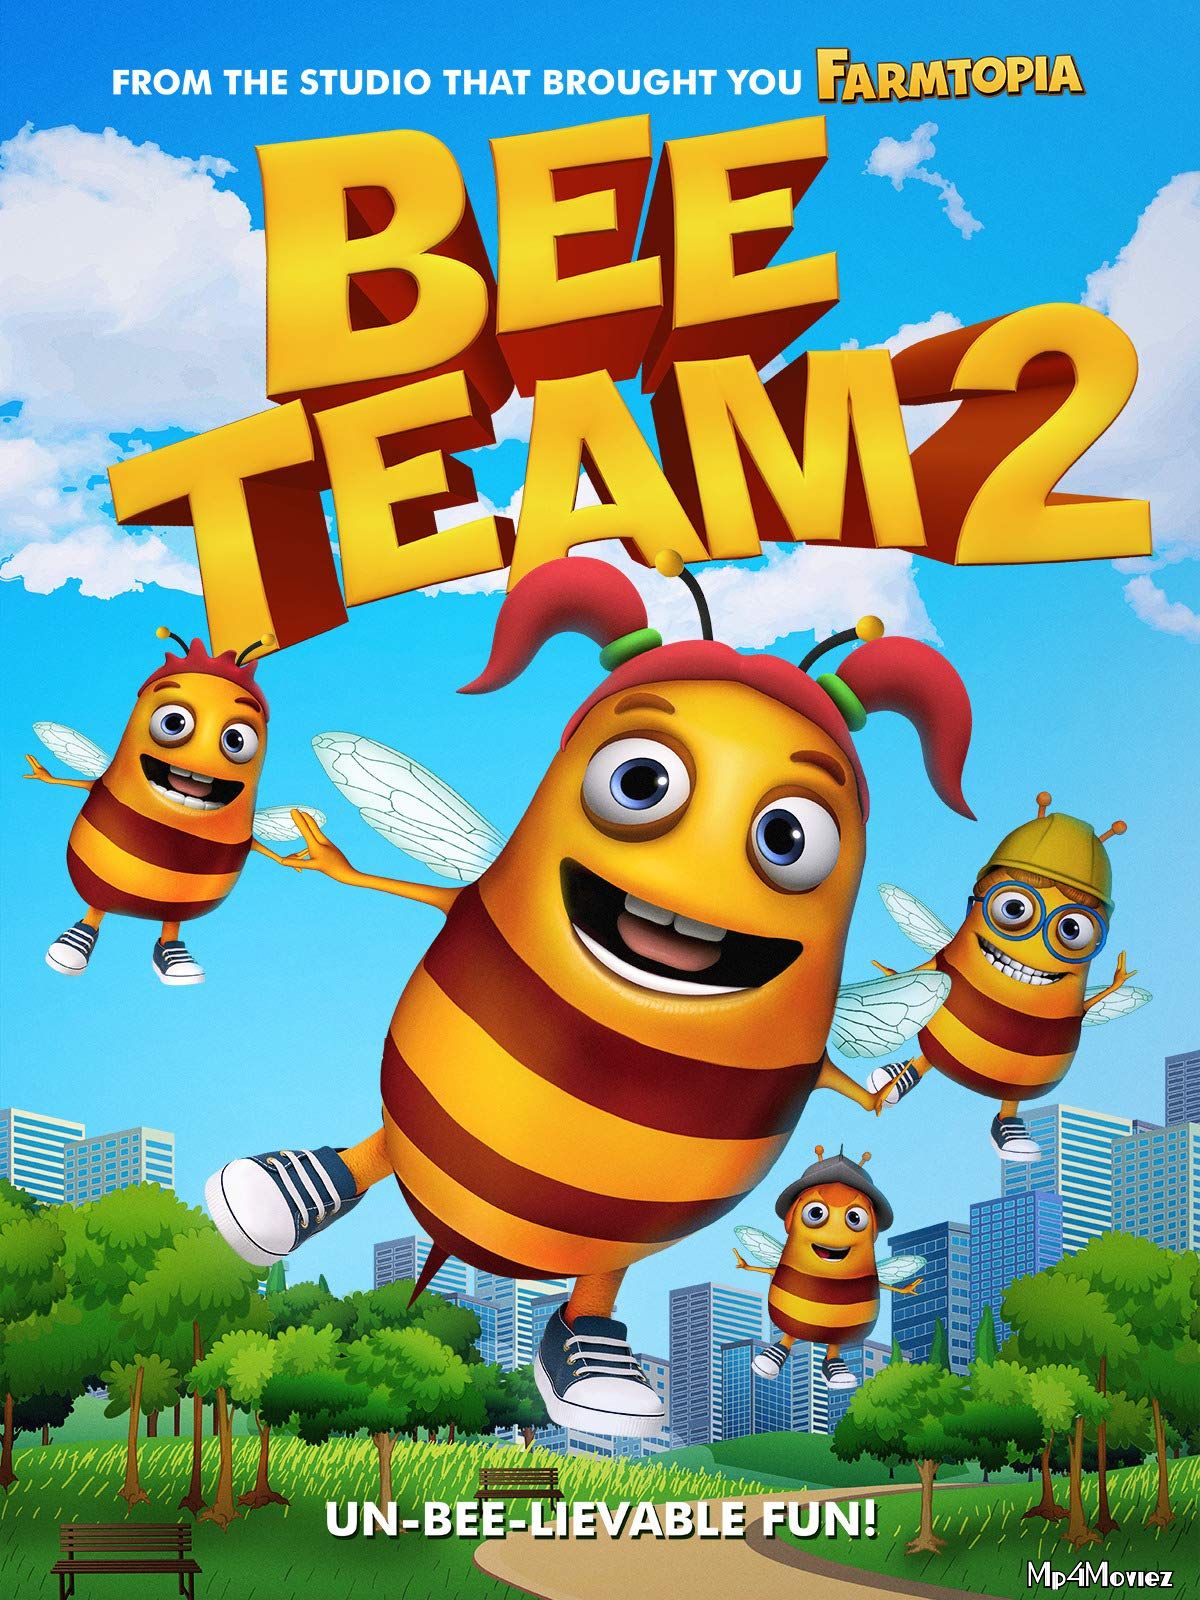 Bee Team 2 (2019) Hindi Dubbed Full Movie download full movie